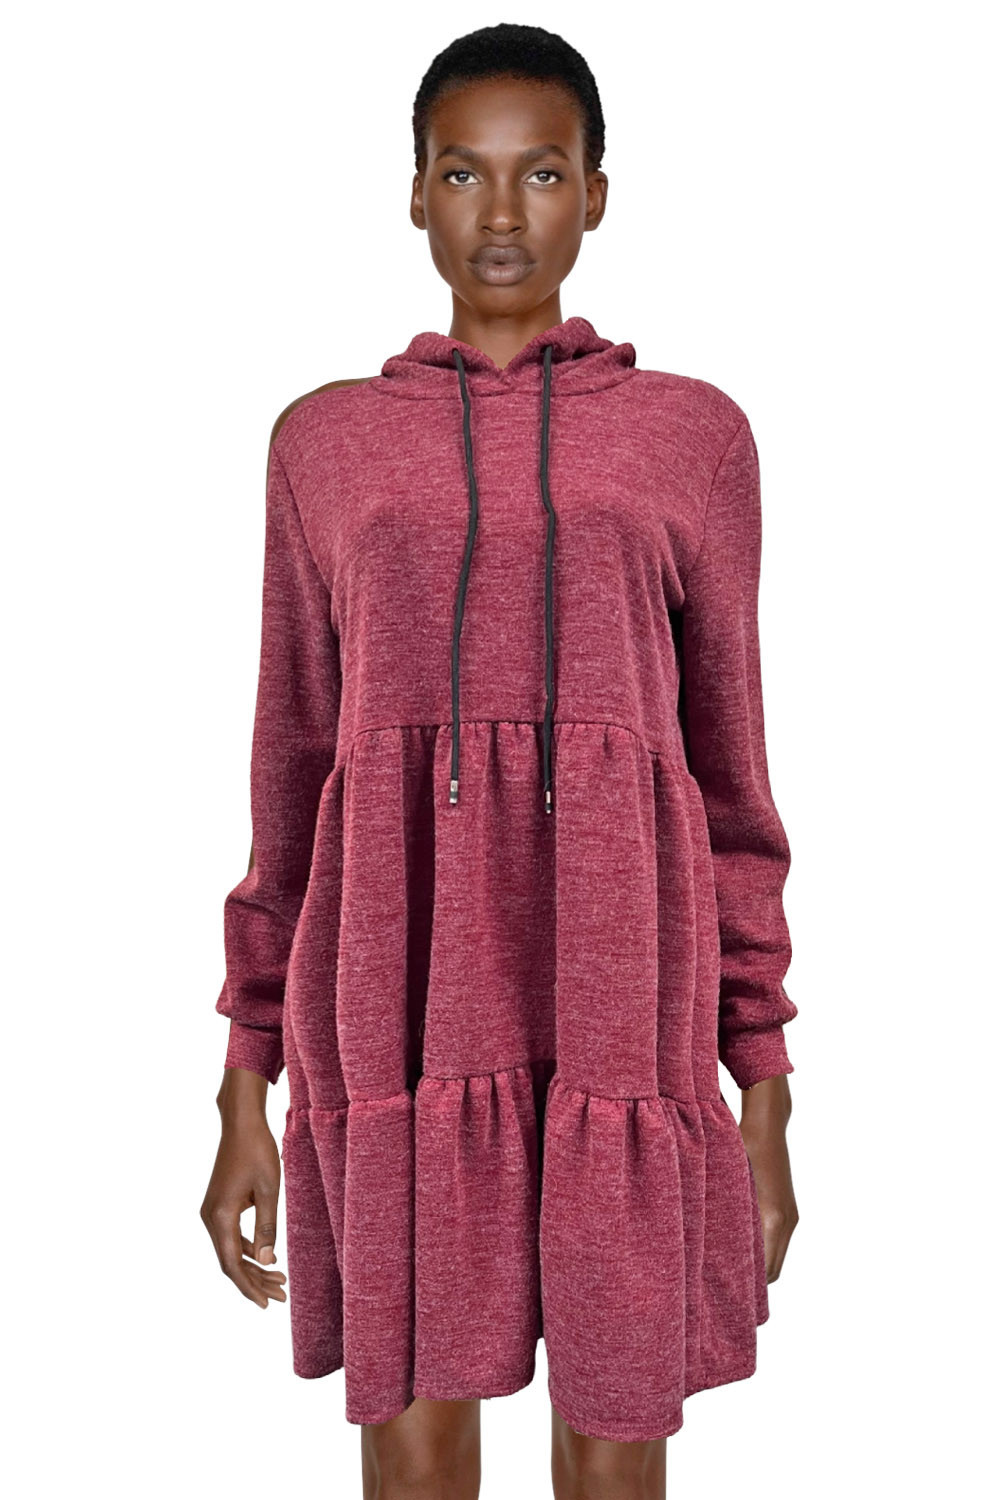 Burgundy hooded sweater dress